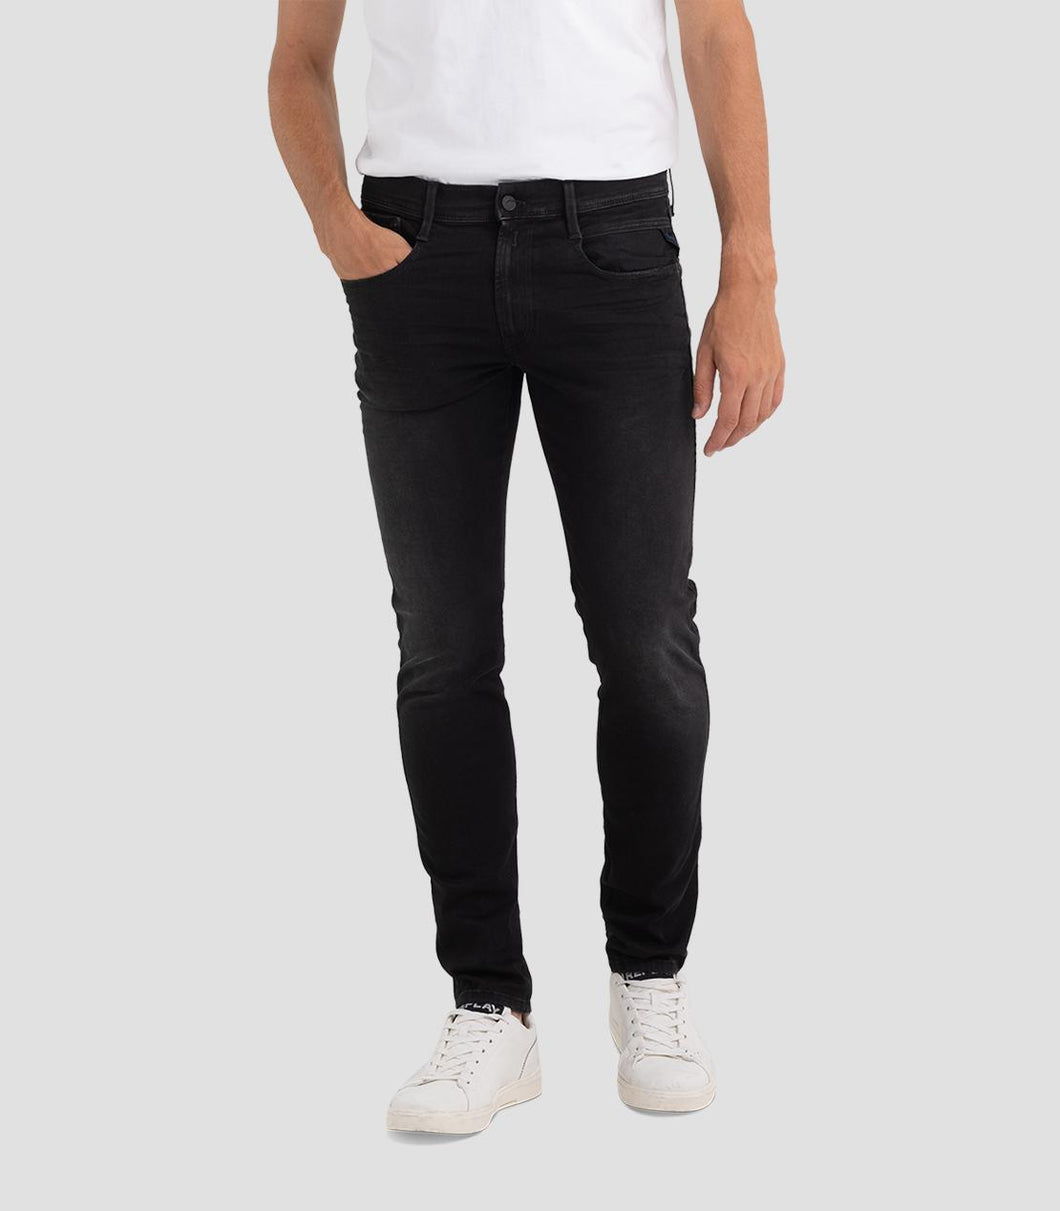 REPLAY HYPERFLEX RE-USED X-LITE Slim Fit Anbass Jeans in Black M914Y 000 661 XRB1